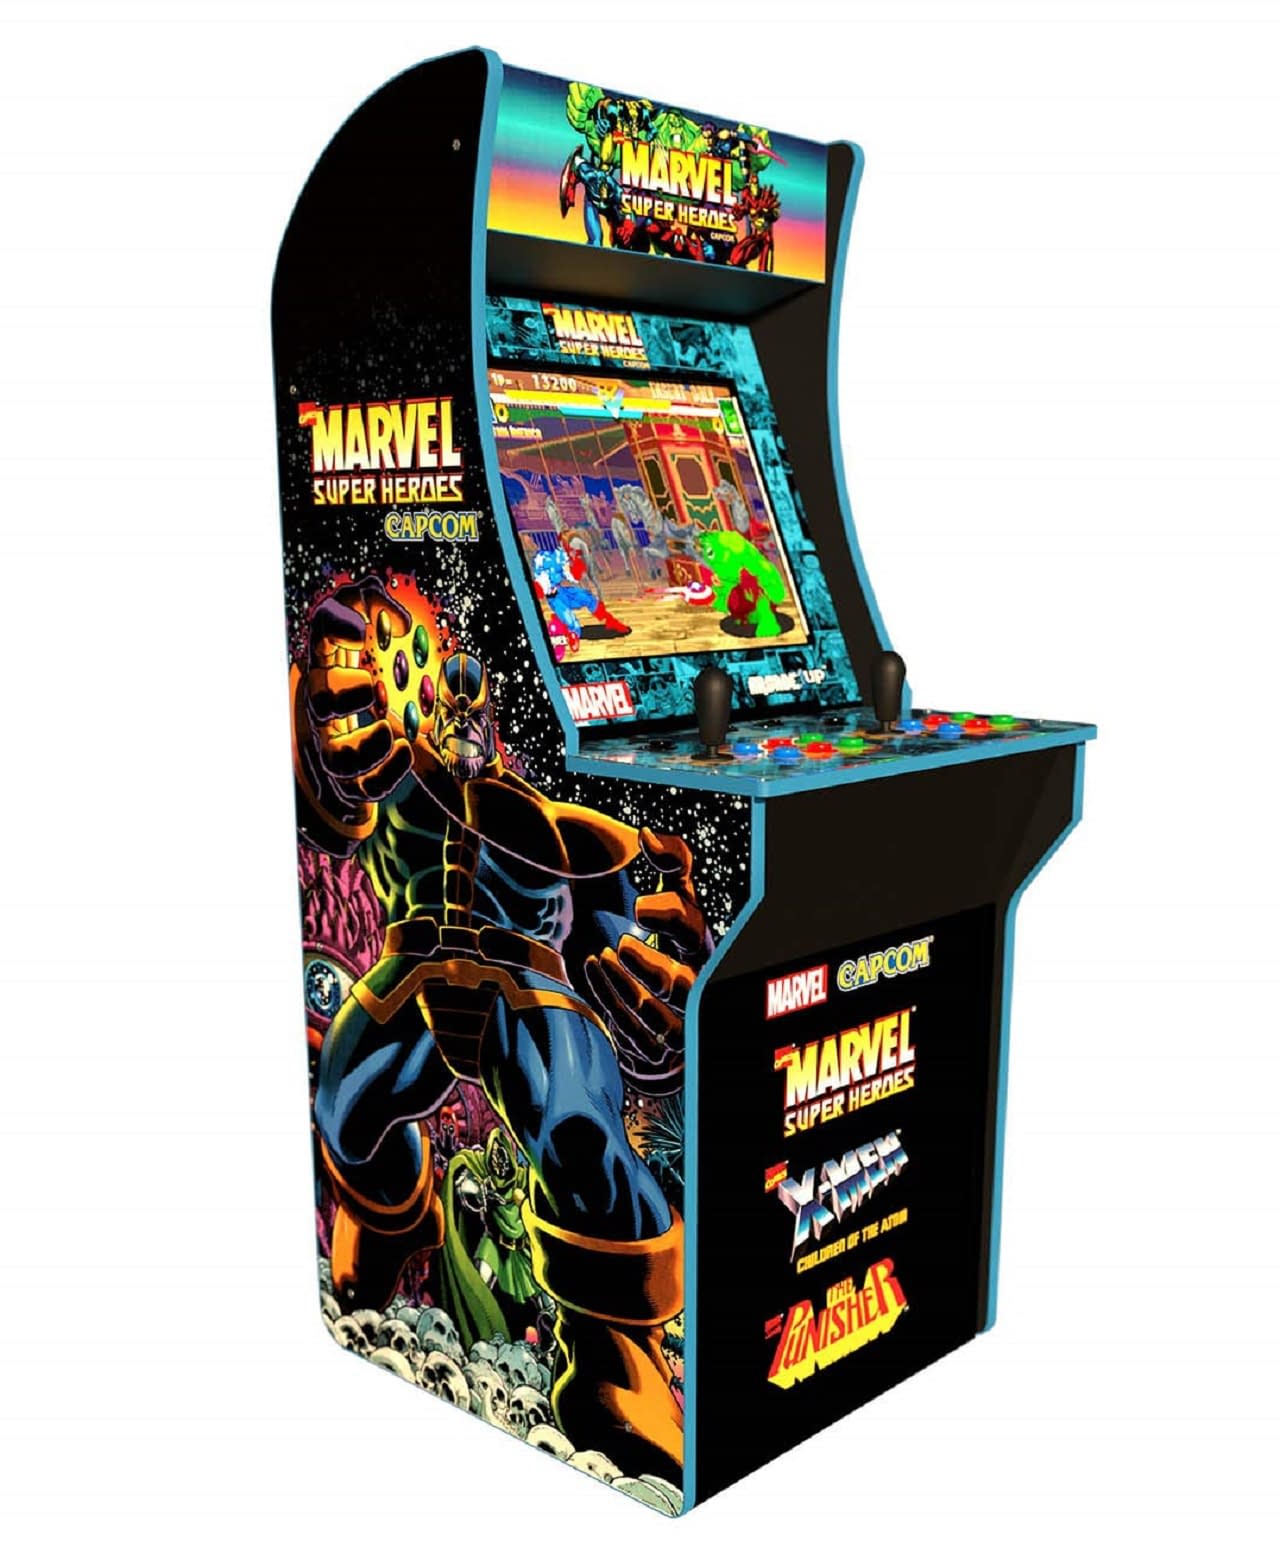 Marvel Super Heroes Arcade Cabinet